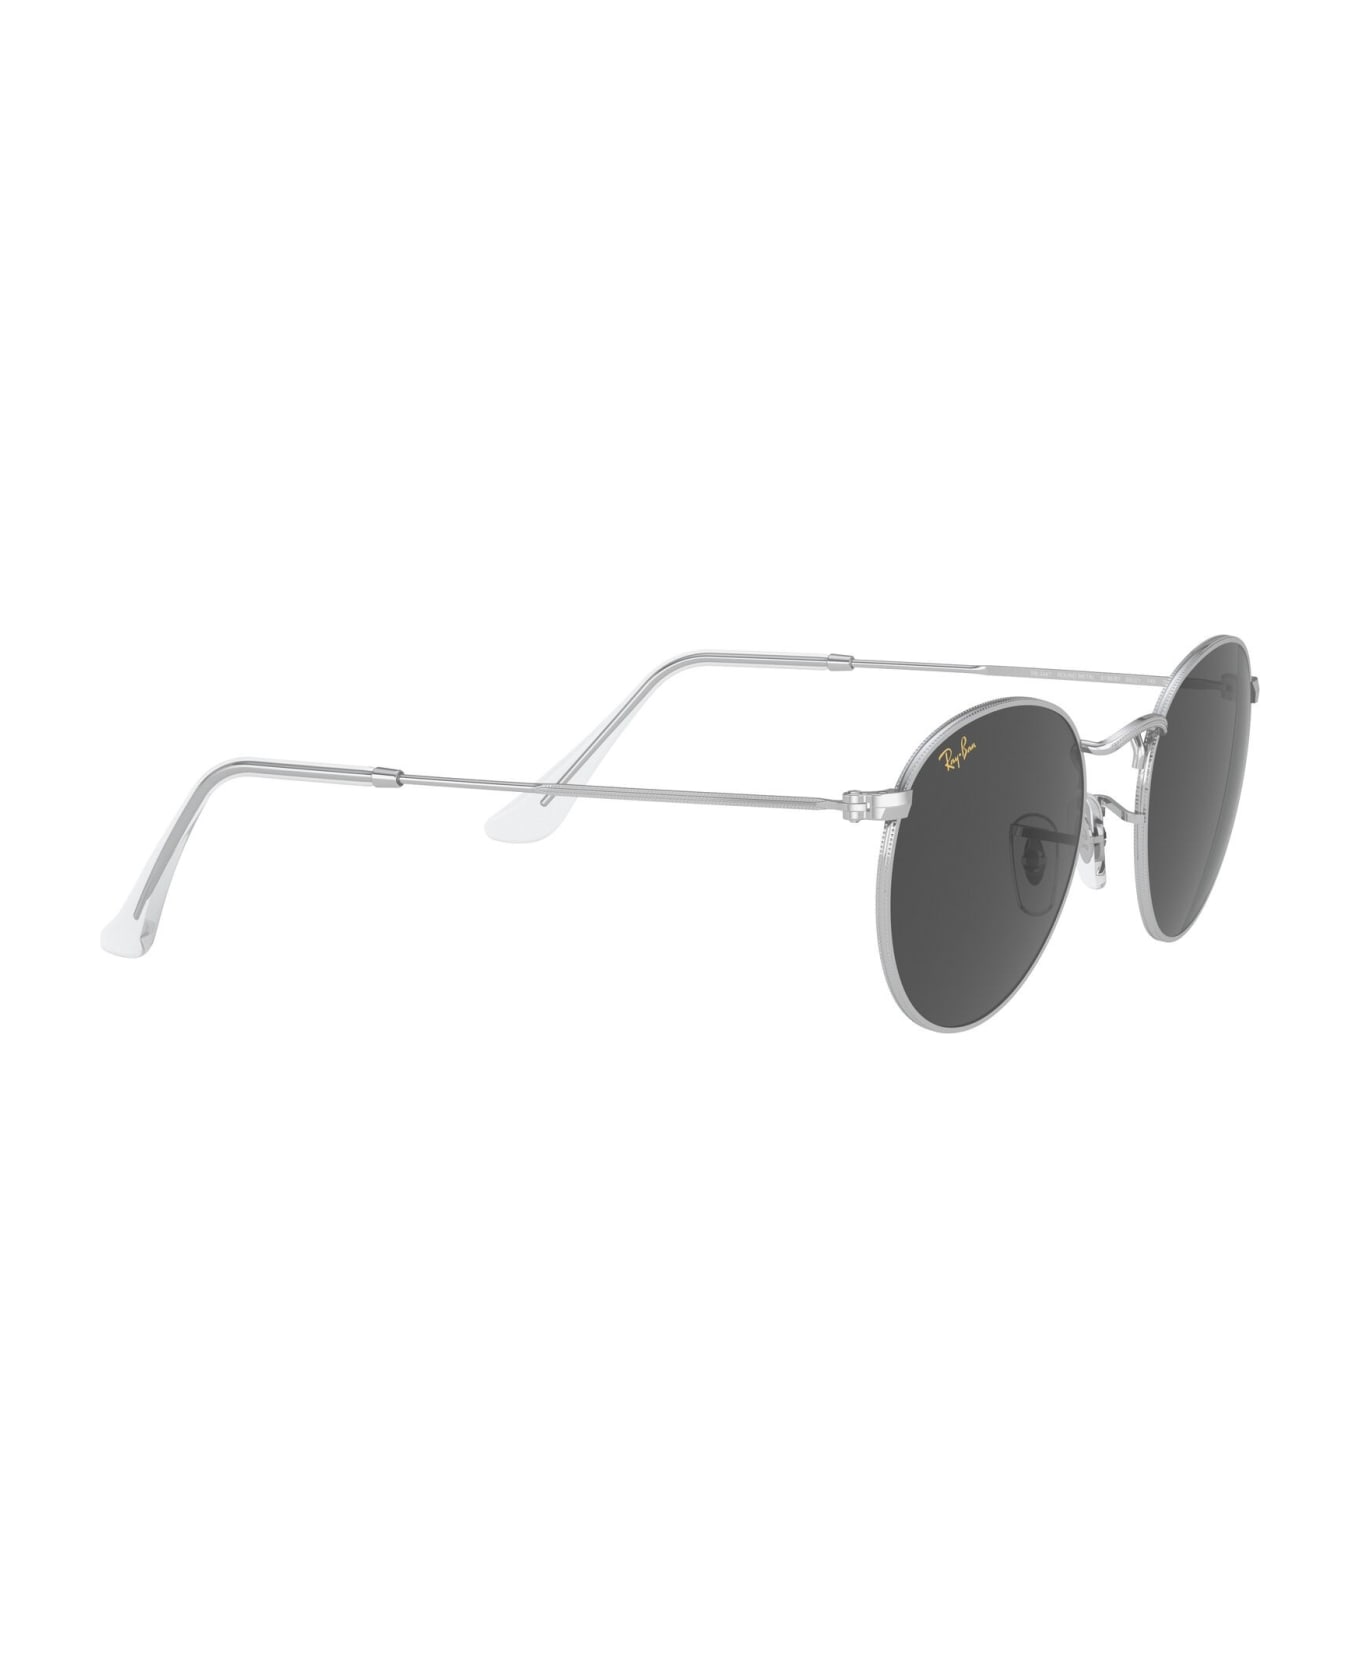 Ray-Ban Sunglasses - Silver/Grigio サングラス